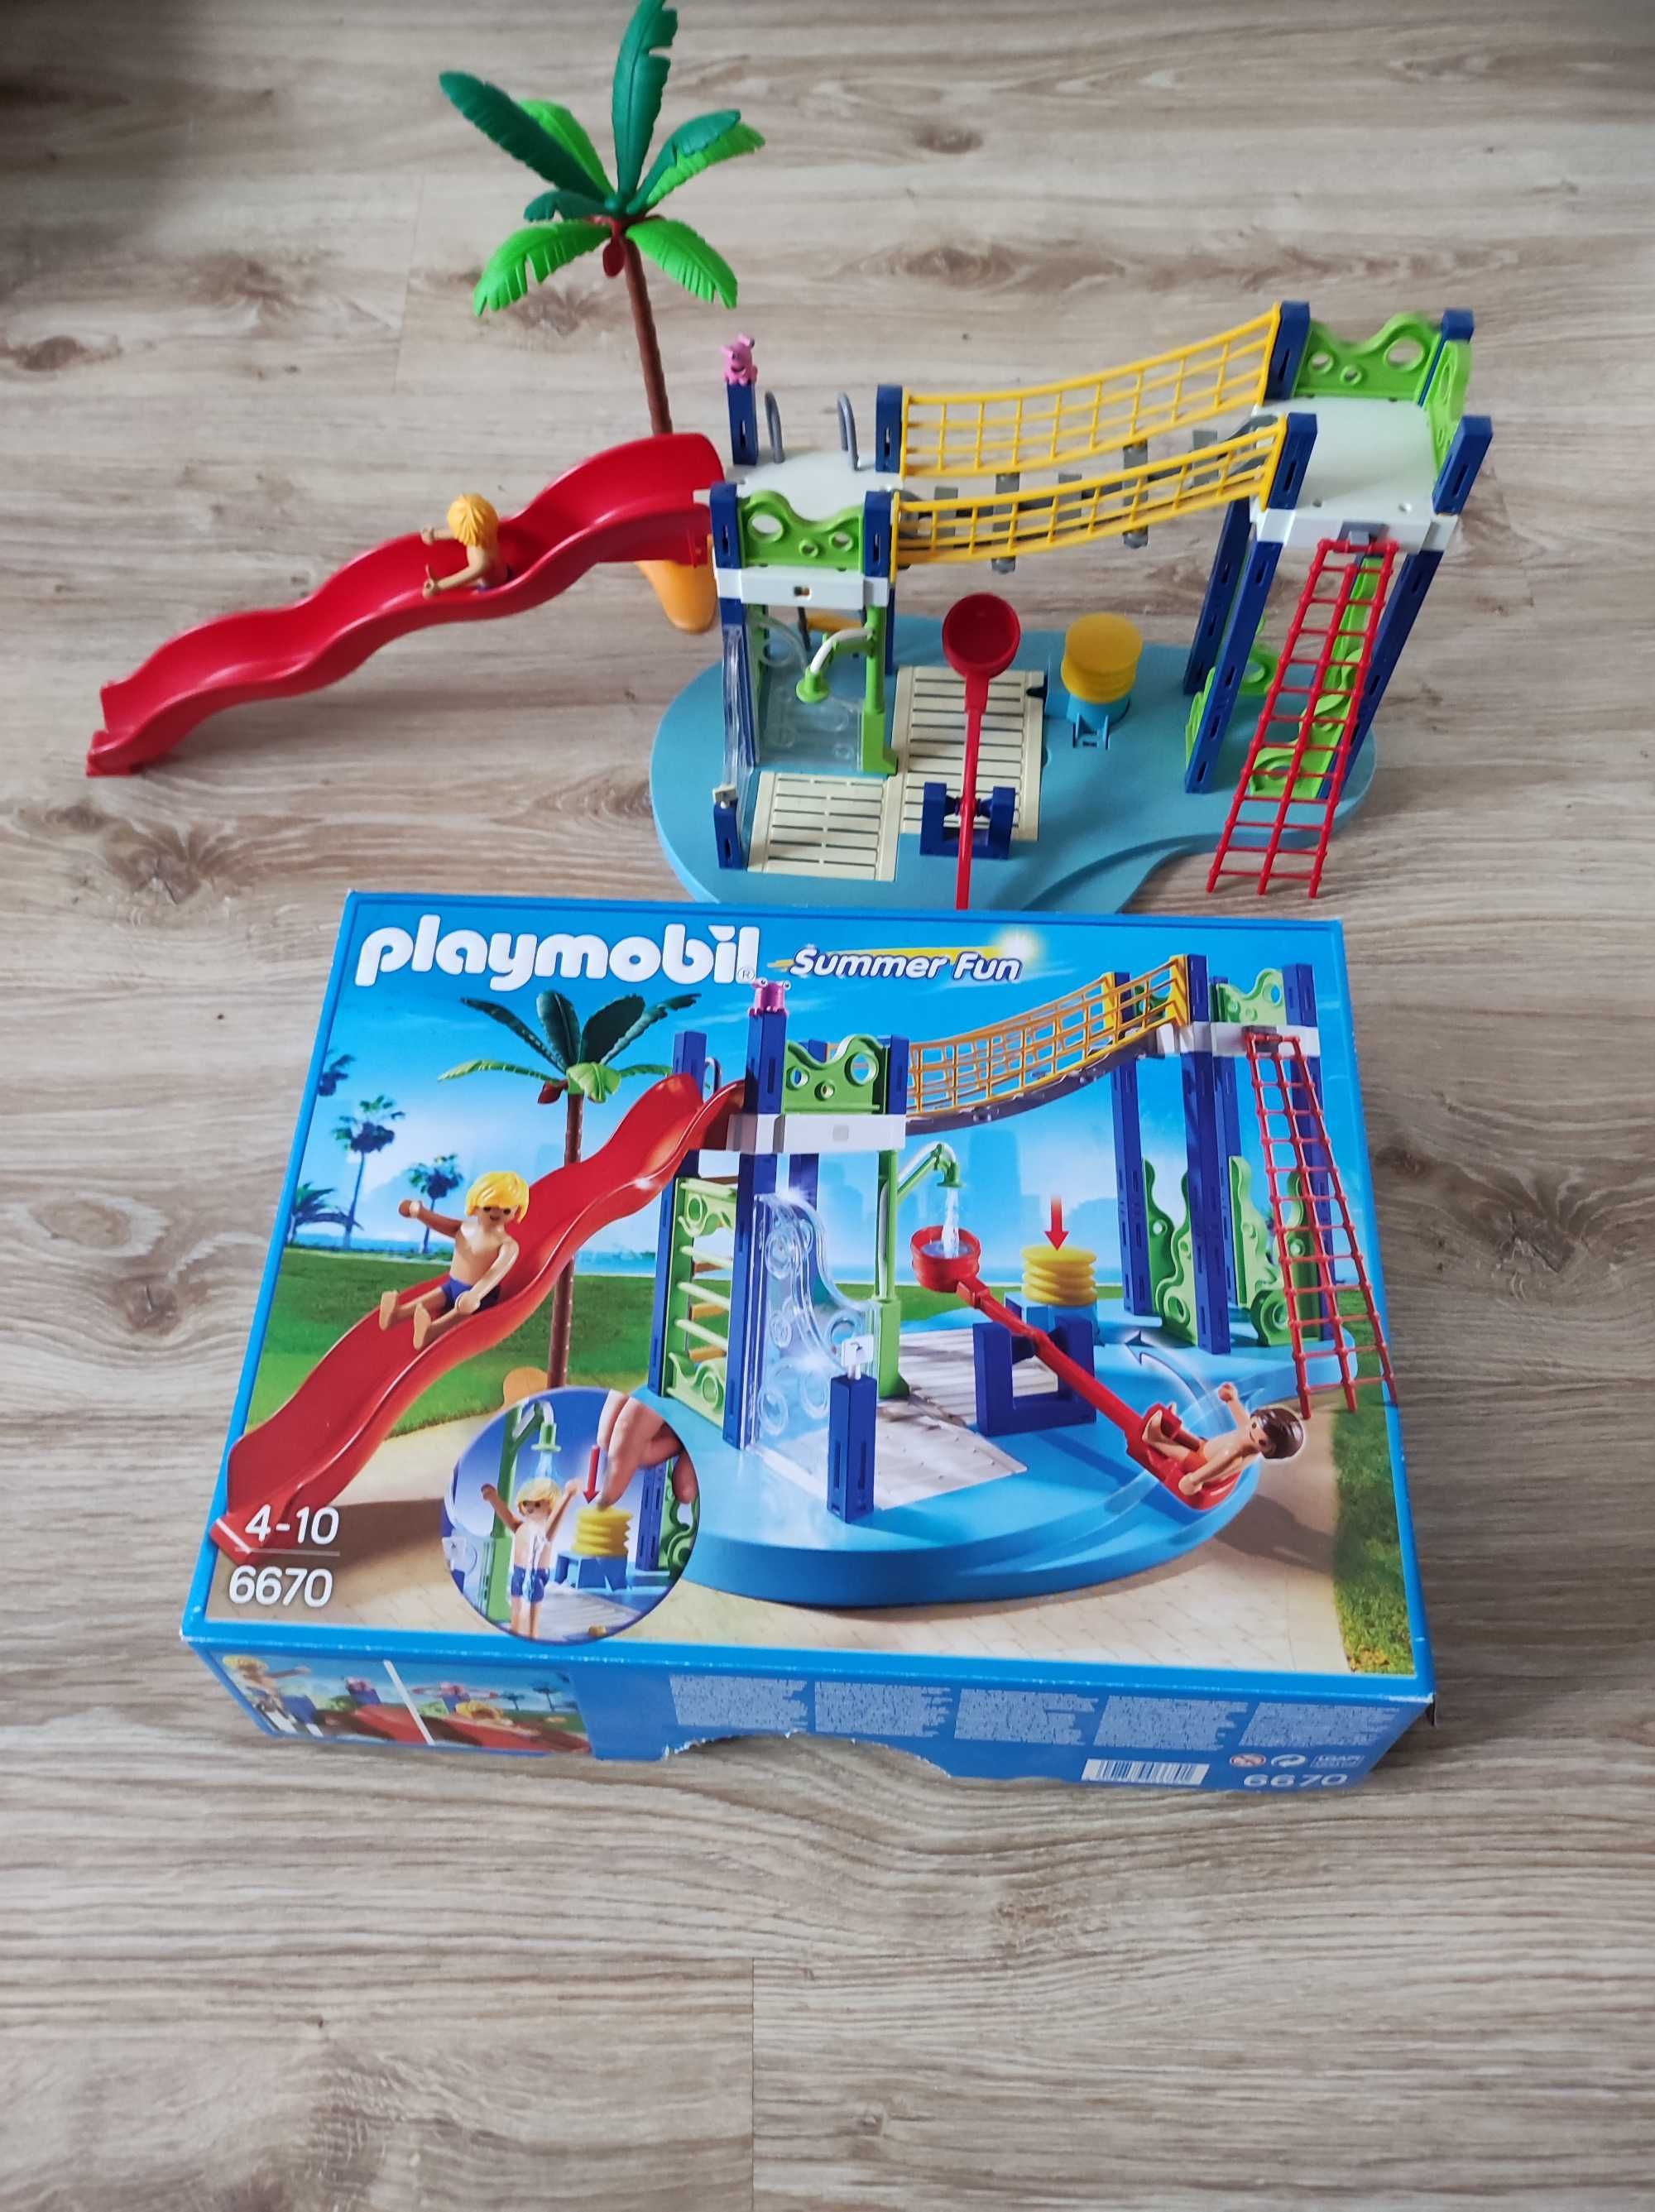 Playmobil Summer Fun 6670 Wodny plac zabaw